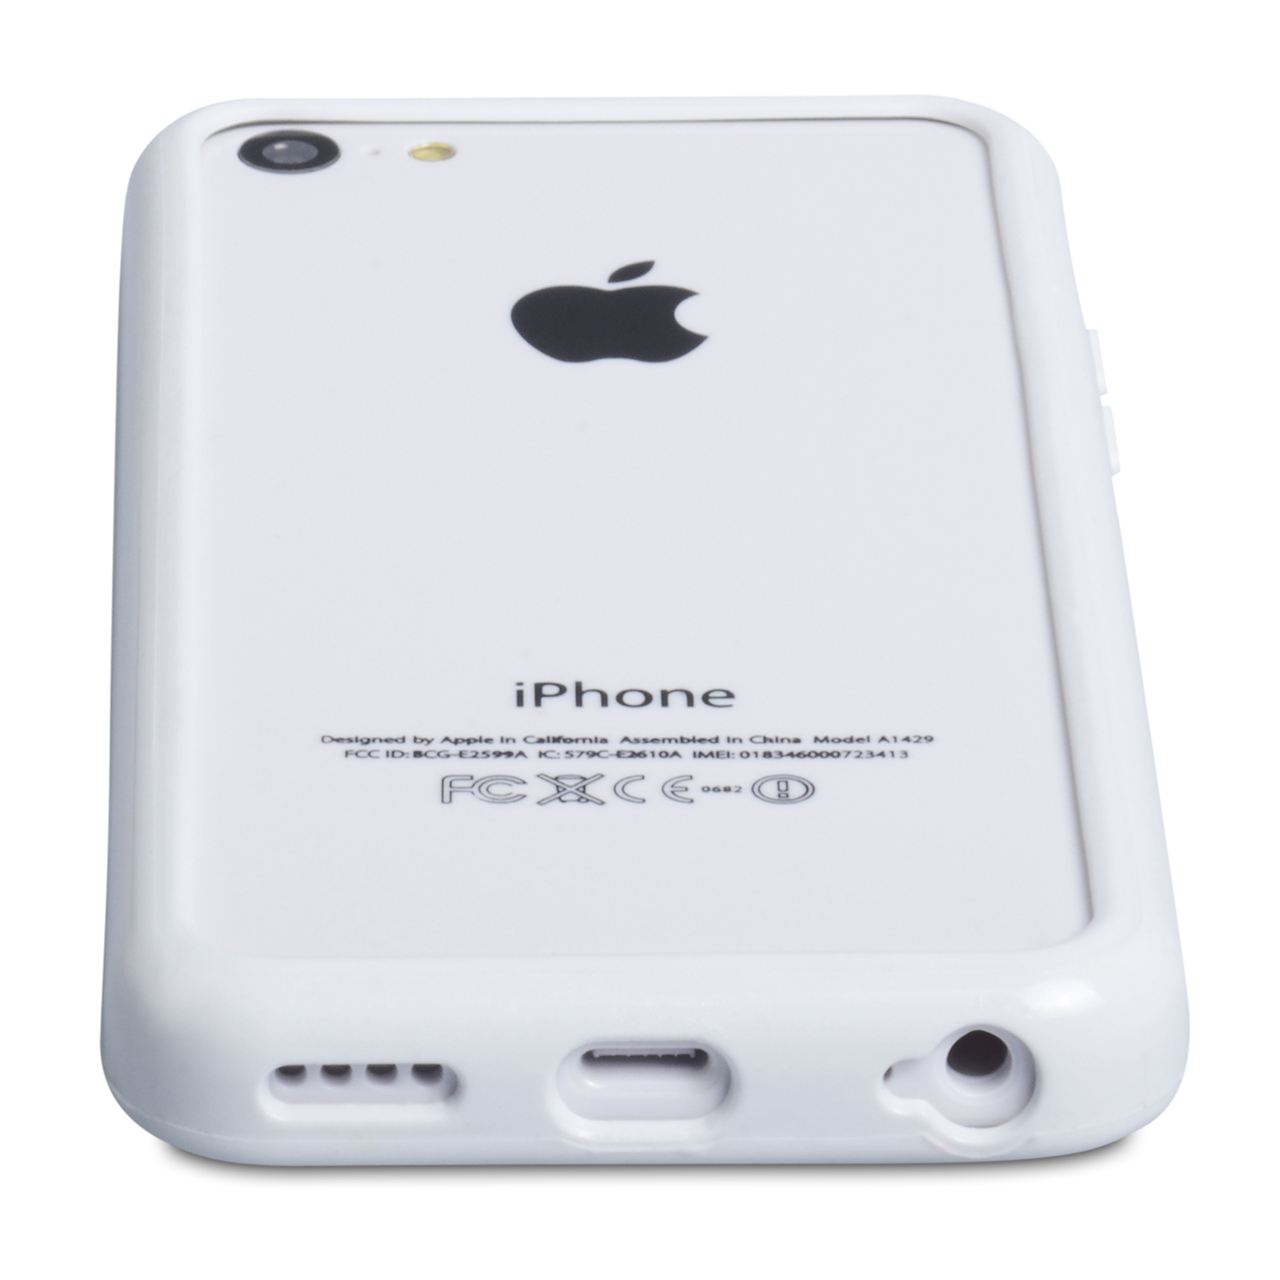 YouSave Accessories iPhone 5C Bumper Case - White